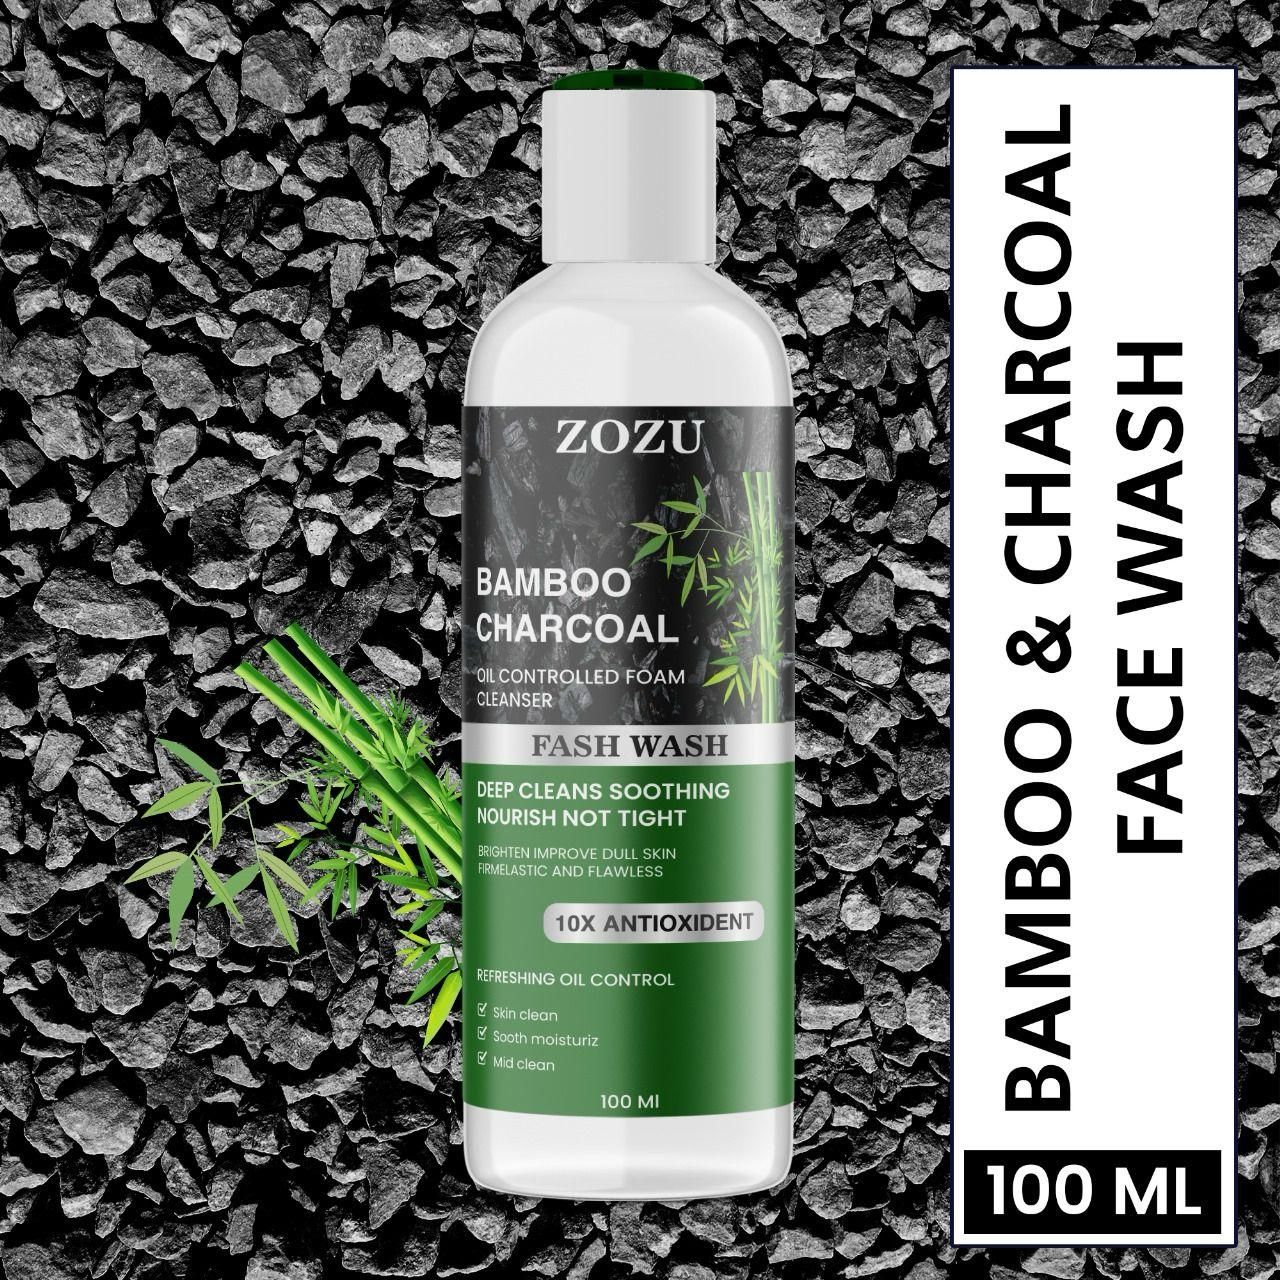 ZOZU Charcoal Face Wash 10x AntiOxident 100ml